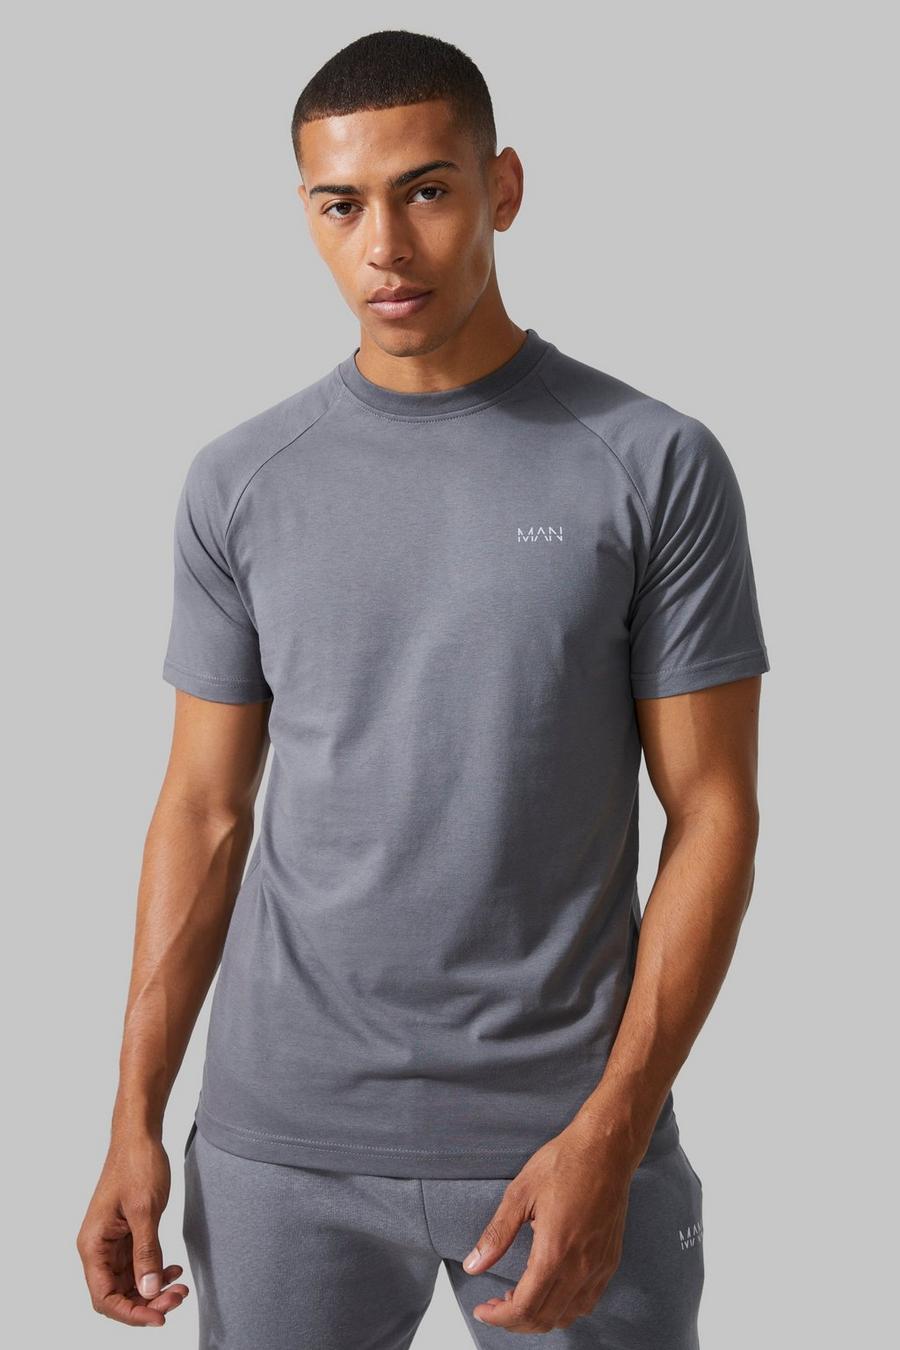 Man Active Gym Raglan T-Shirt, Charcoal grey